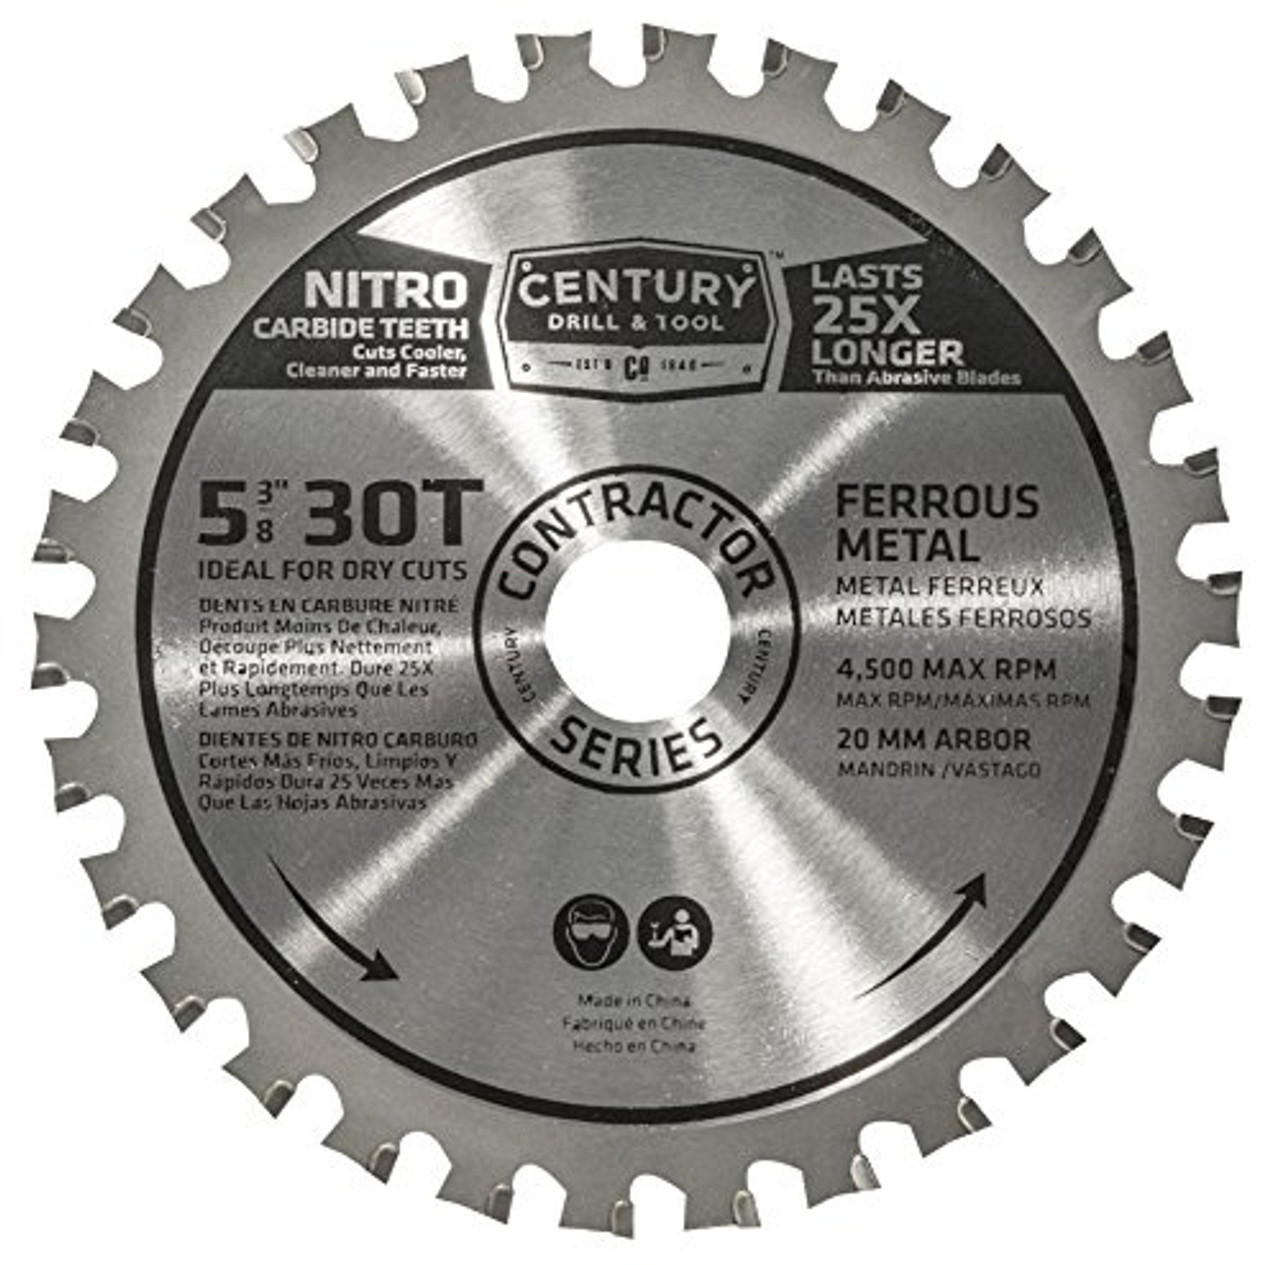 Century Drill & Tool 10297 Metal Series Circular Saw Blade, 5-3/8